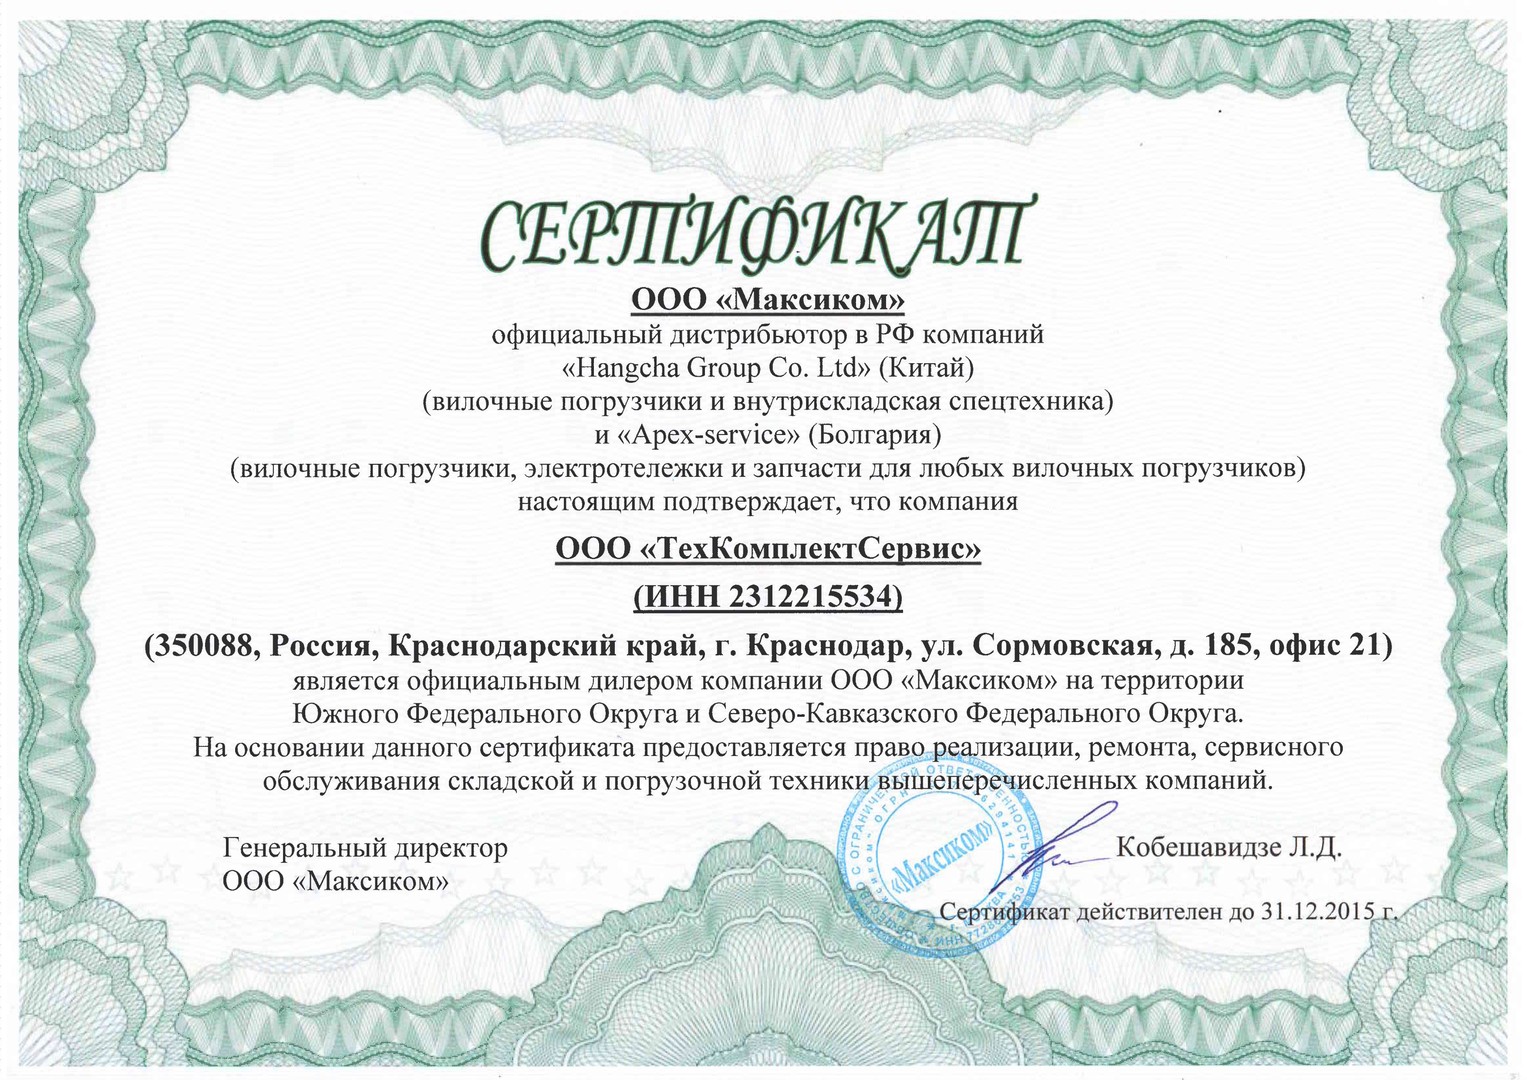 Сертификат дилера Шакман